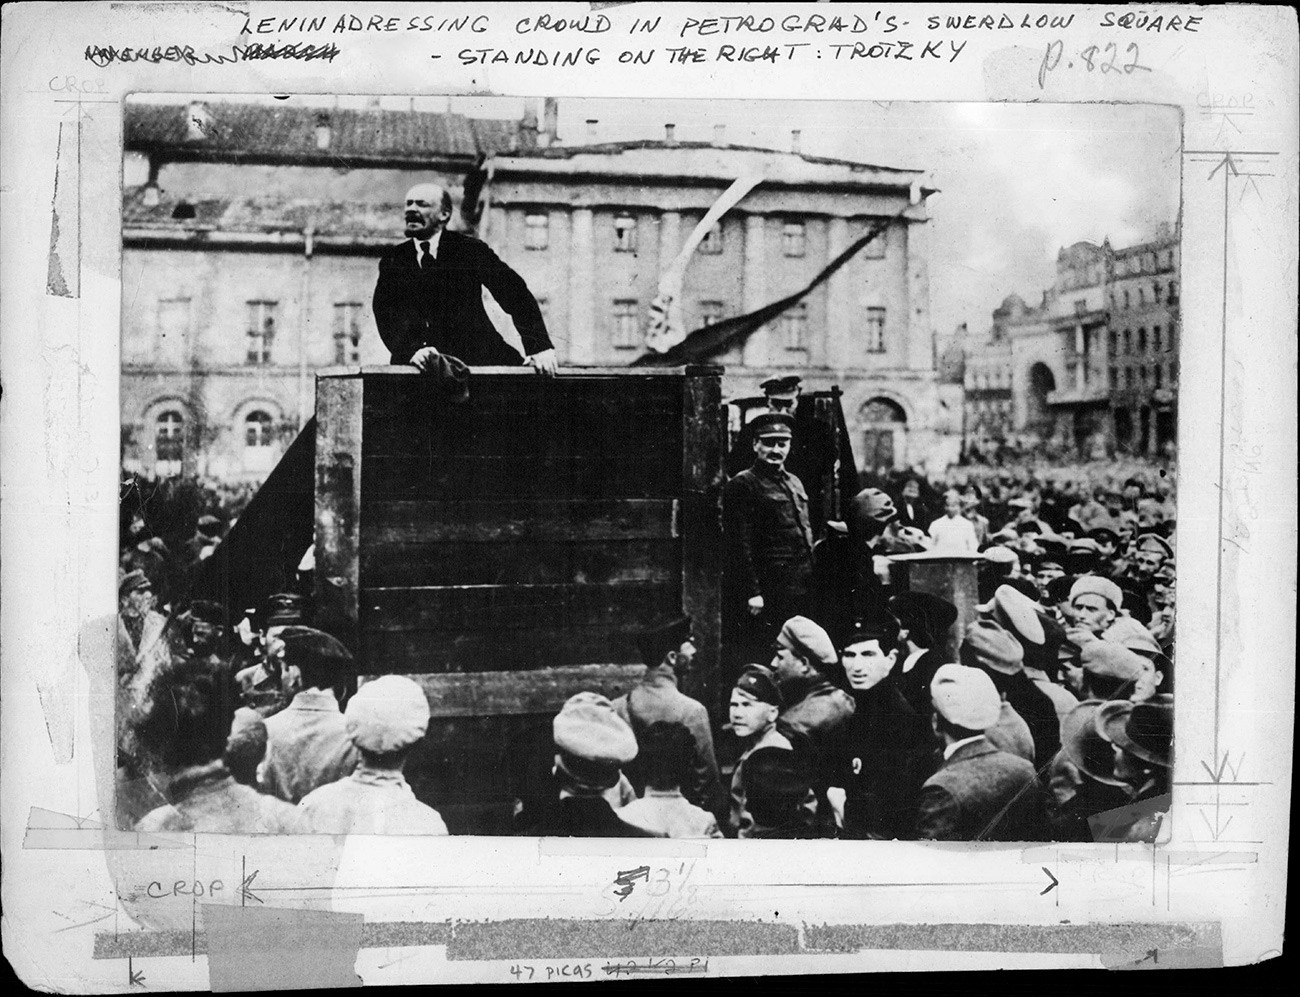 Lenin addressing crowd In Petrograd, 1919